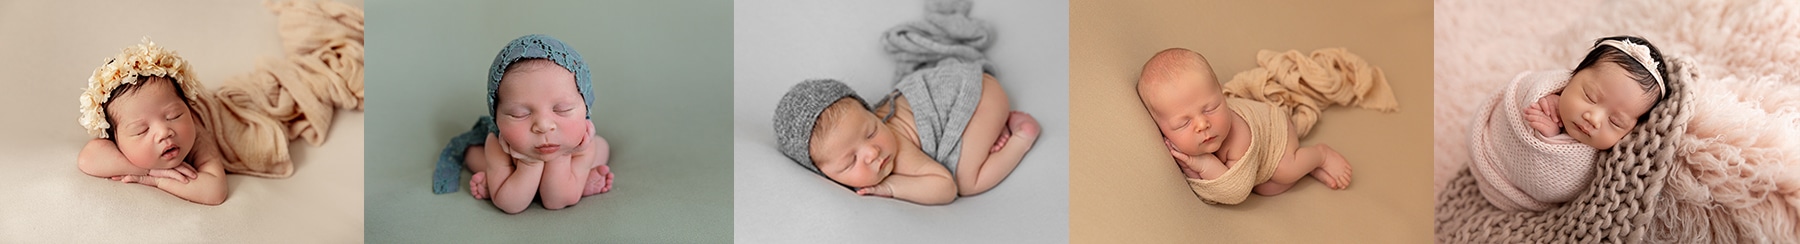 NEWBORN WORKSHOP FOTOGRAFIA PETIT MONDE KRISTINA RECHE 316 - Newborn